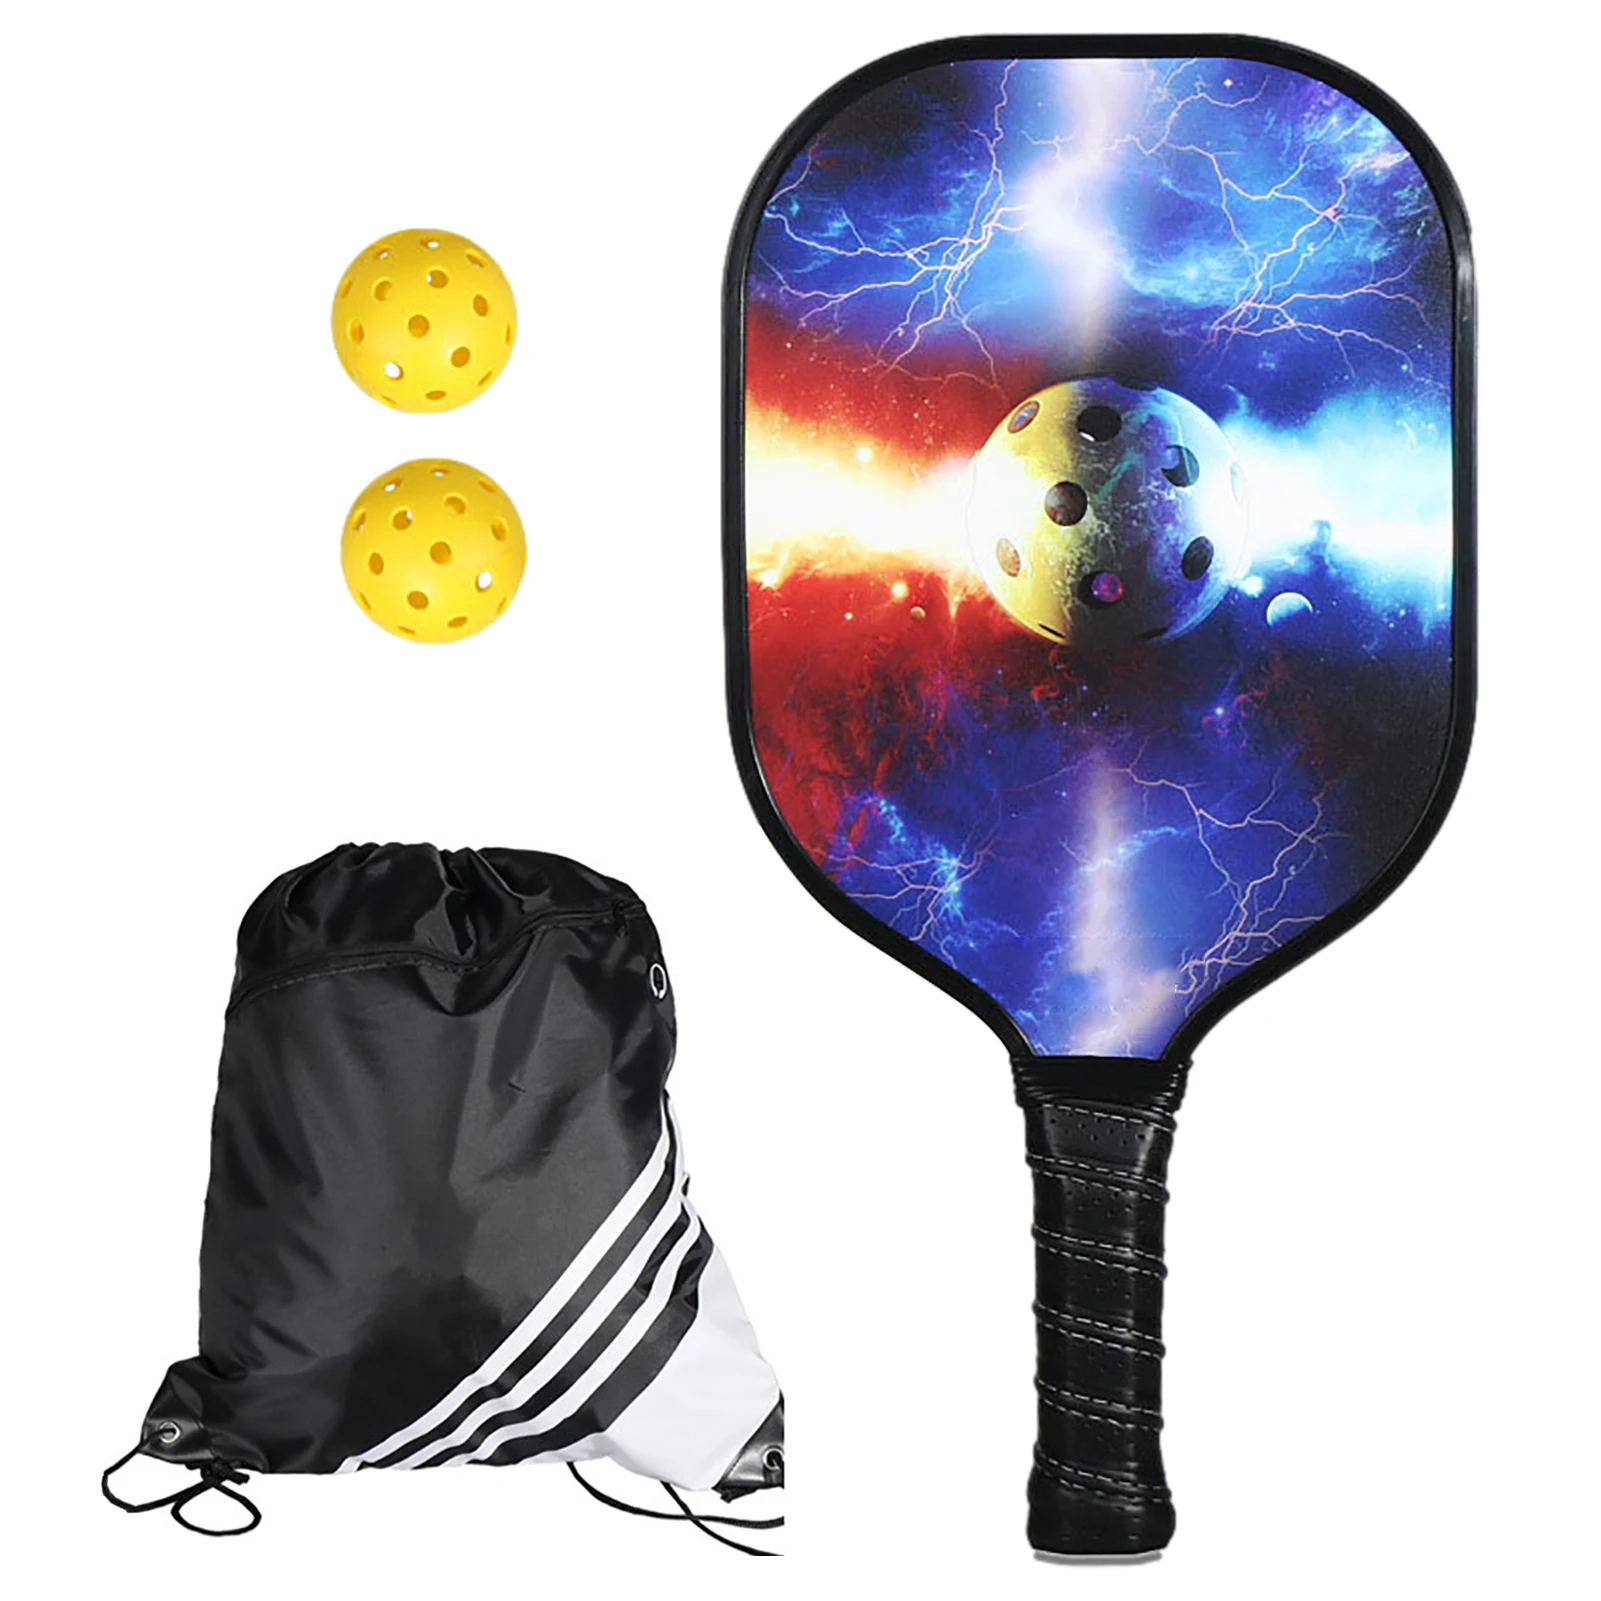 

Outdoor Beach Racket Shock Absorption Ultra Portable Beach Racquet Durable Tennis Racket With Comfortable Ergonomic Grip